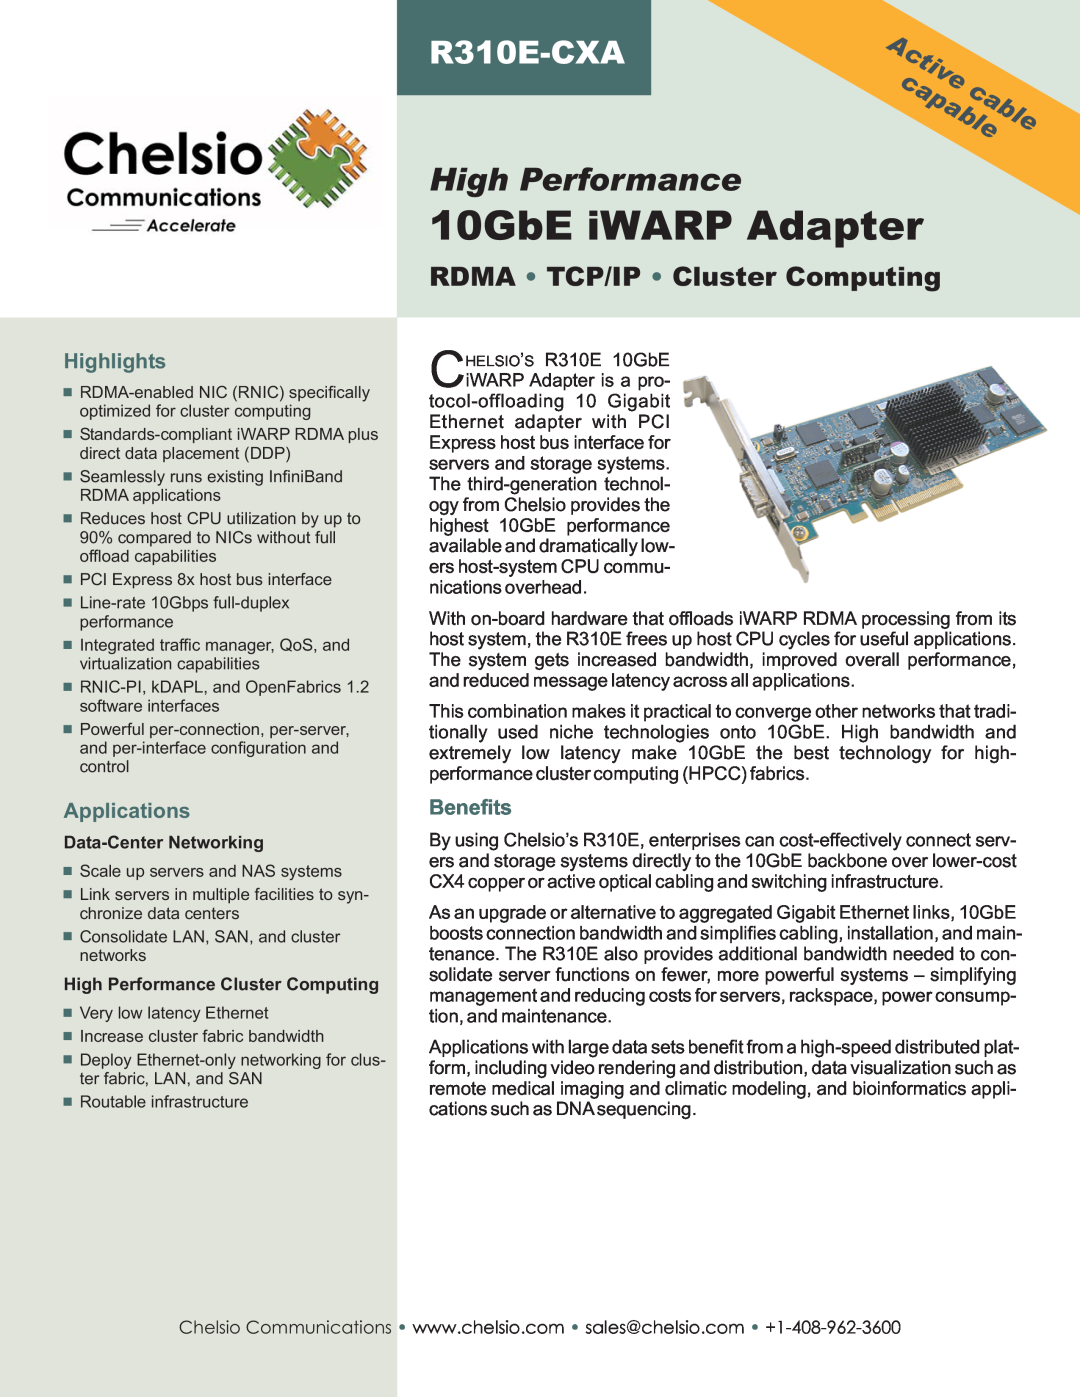 Chelsio Communications R310E-CXA manual Highlights, Applications, Benefits, 10GbE iWARP Adapter, High Performance, capable 